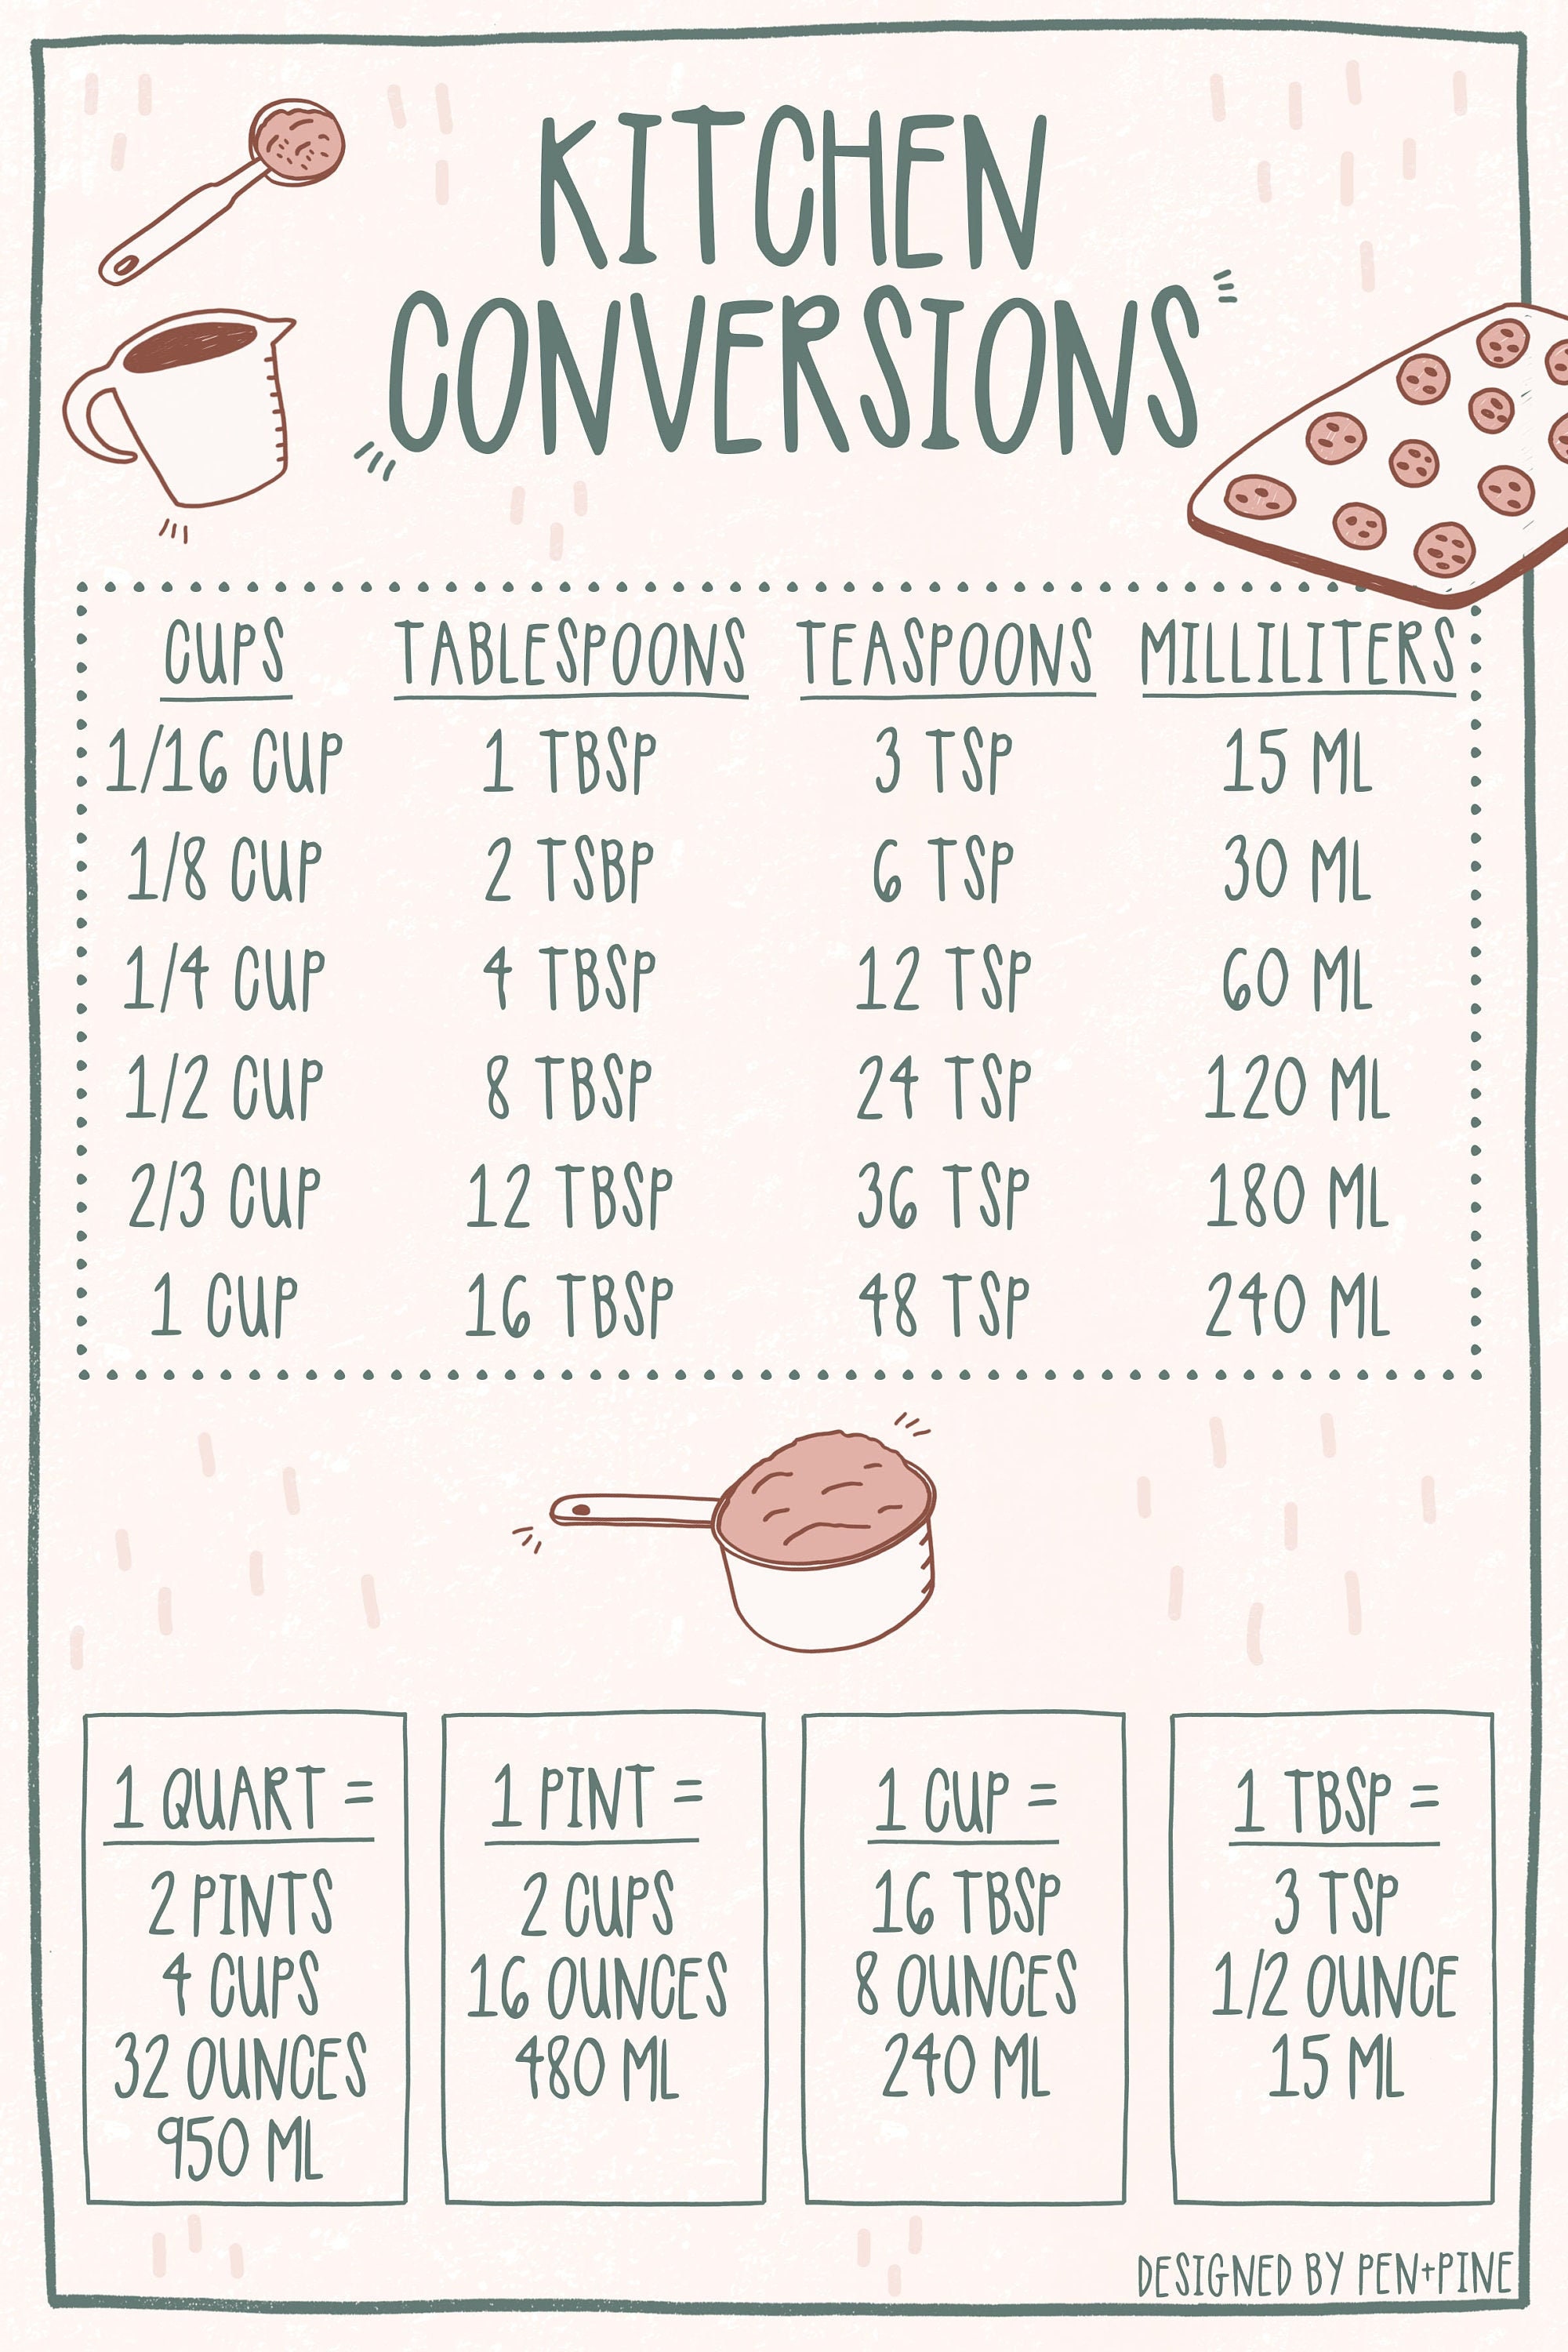  Kitchen Conversion Chart Magnet for Easier Cooking & Kitchen  Baking - Vintage Kitchen Useful Gadgets - Cute Kitchen Accessories Gadgets  - Cooking Accessories & Baking Accessories - Gifts for Bakers : Home &  Kitchen